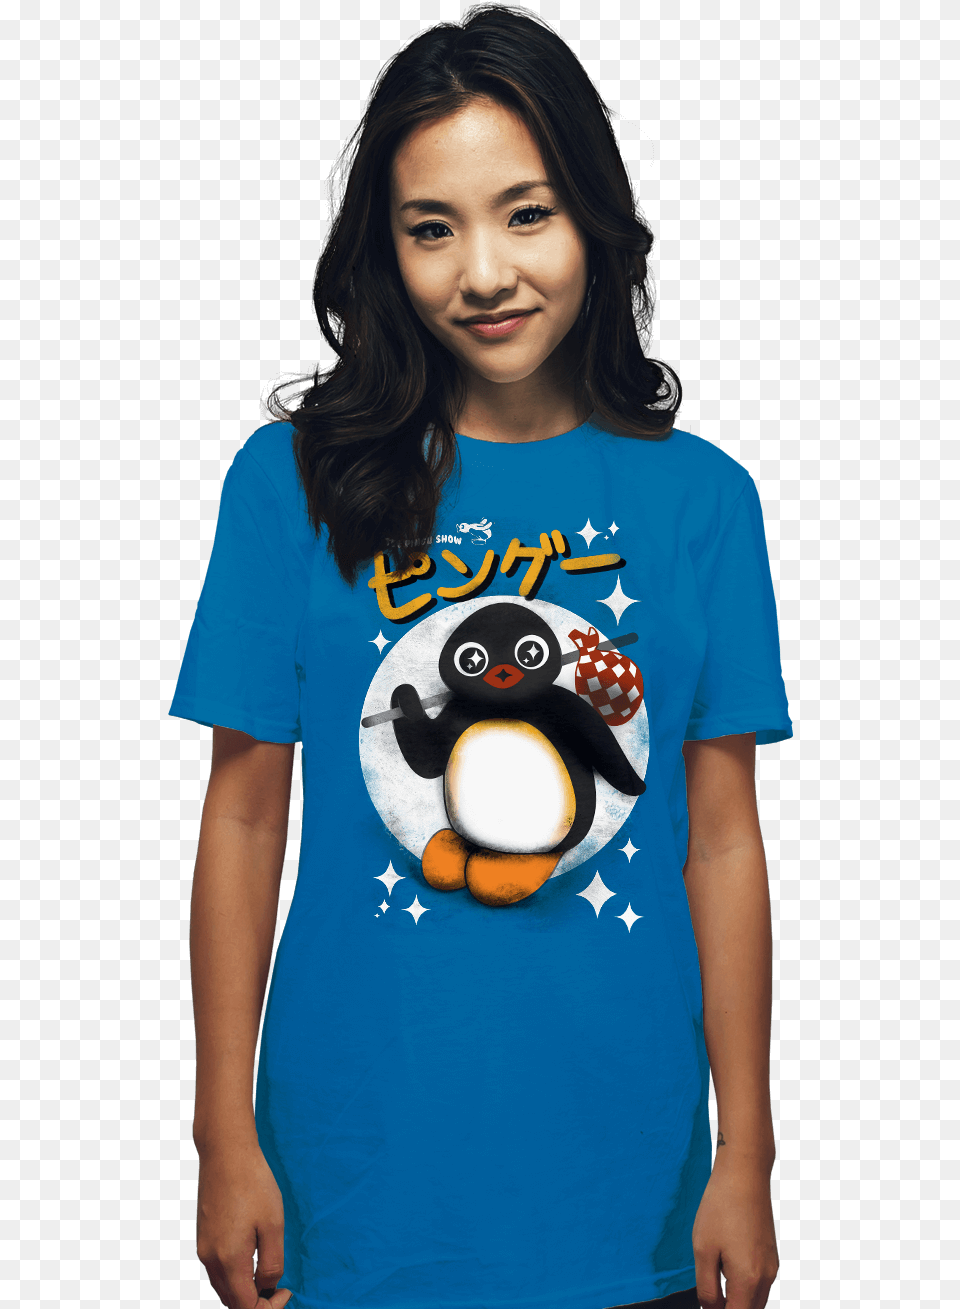 The Pingu Show Aggretsuko T Shirt Glow In The Dark, Clothing, T-shirt, Animal, Bird Png Image